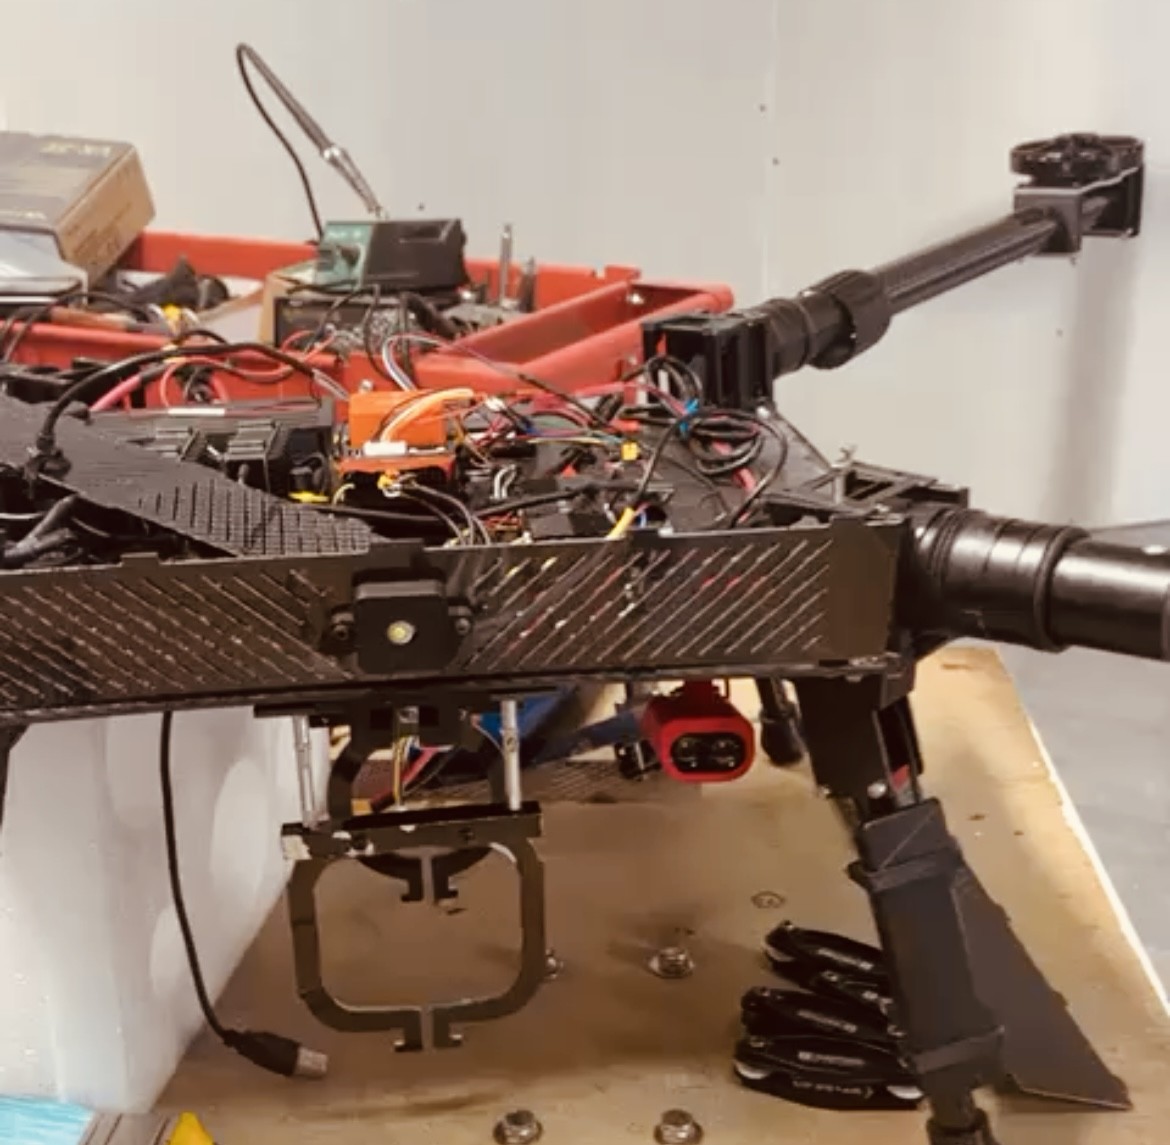 SkyQube drone uav Dronelab